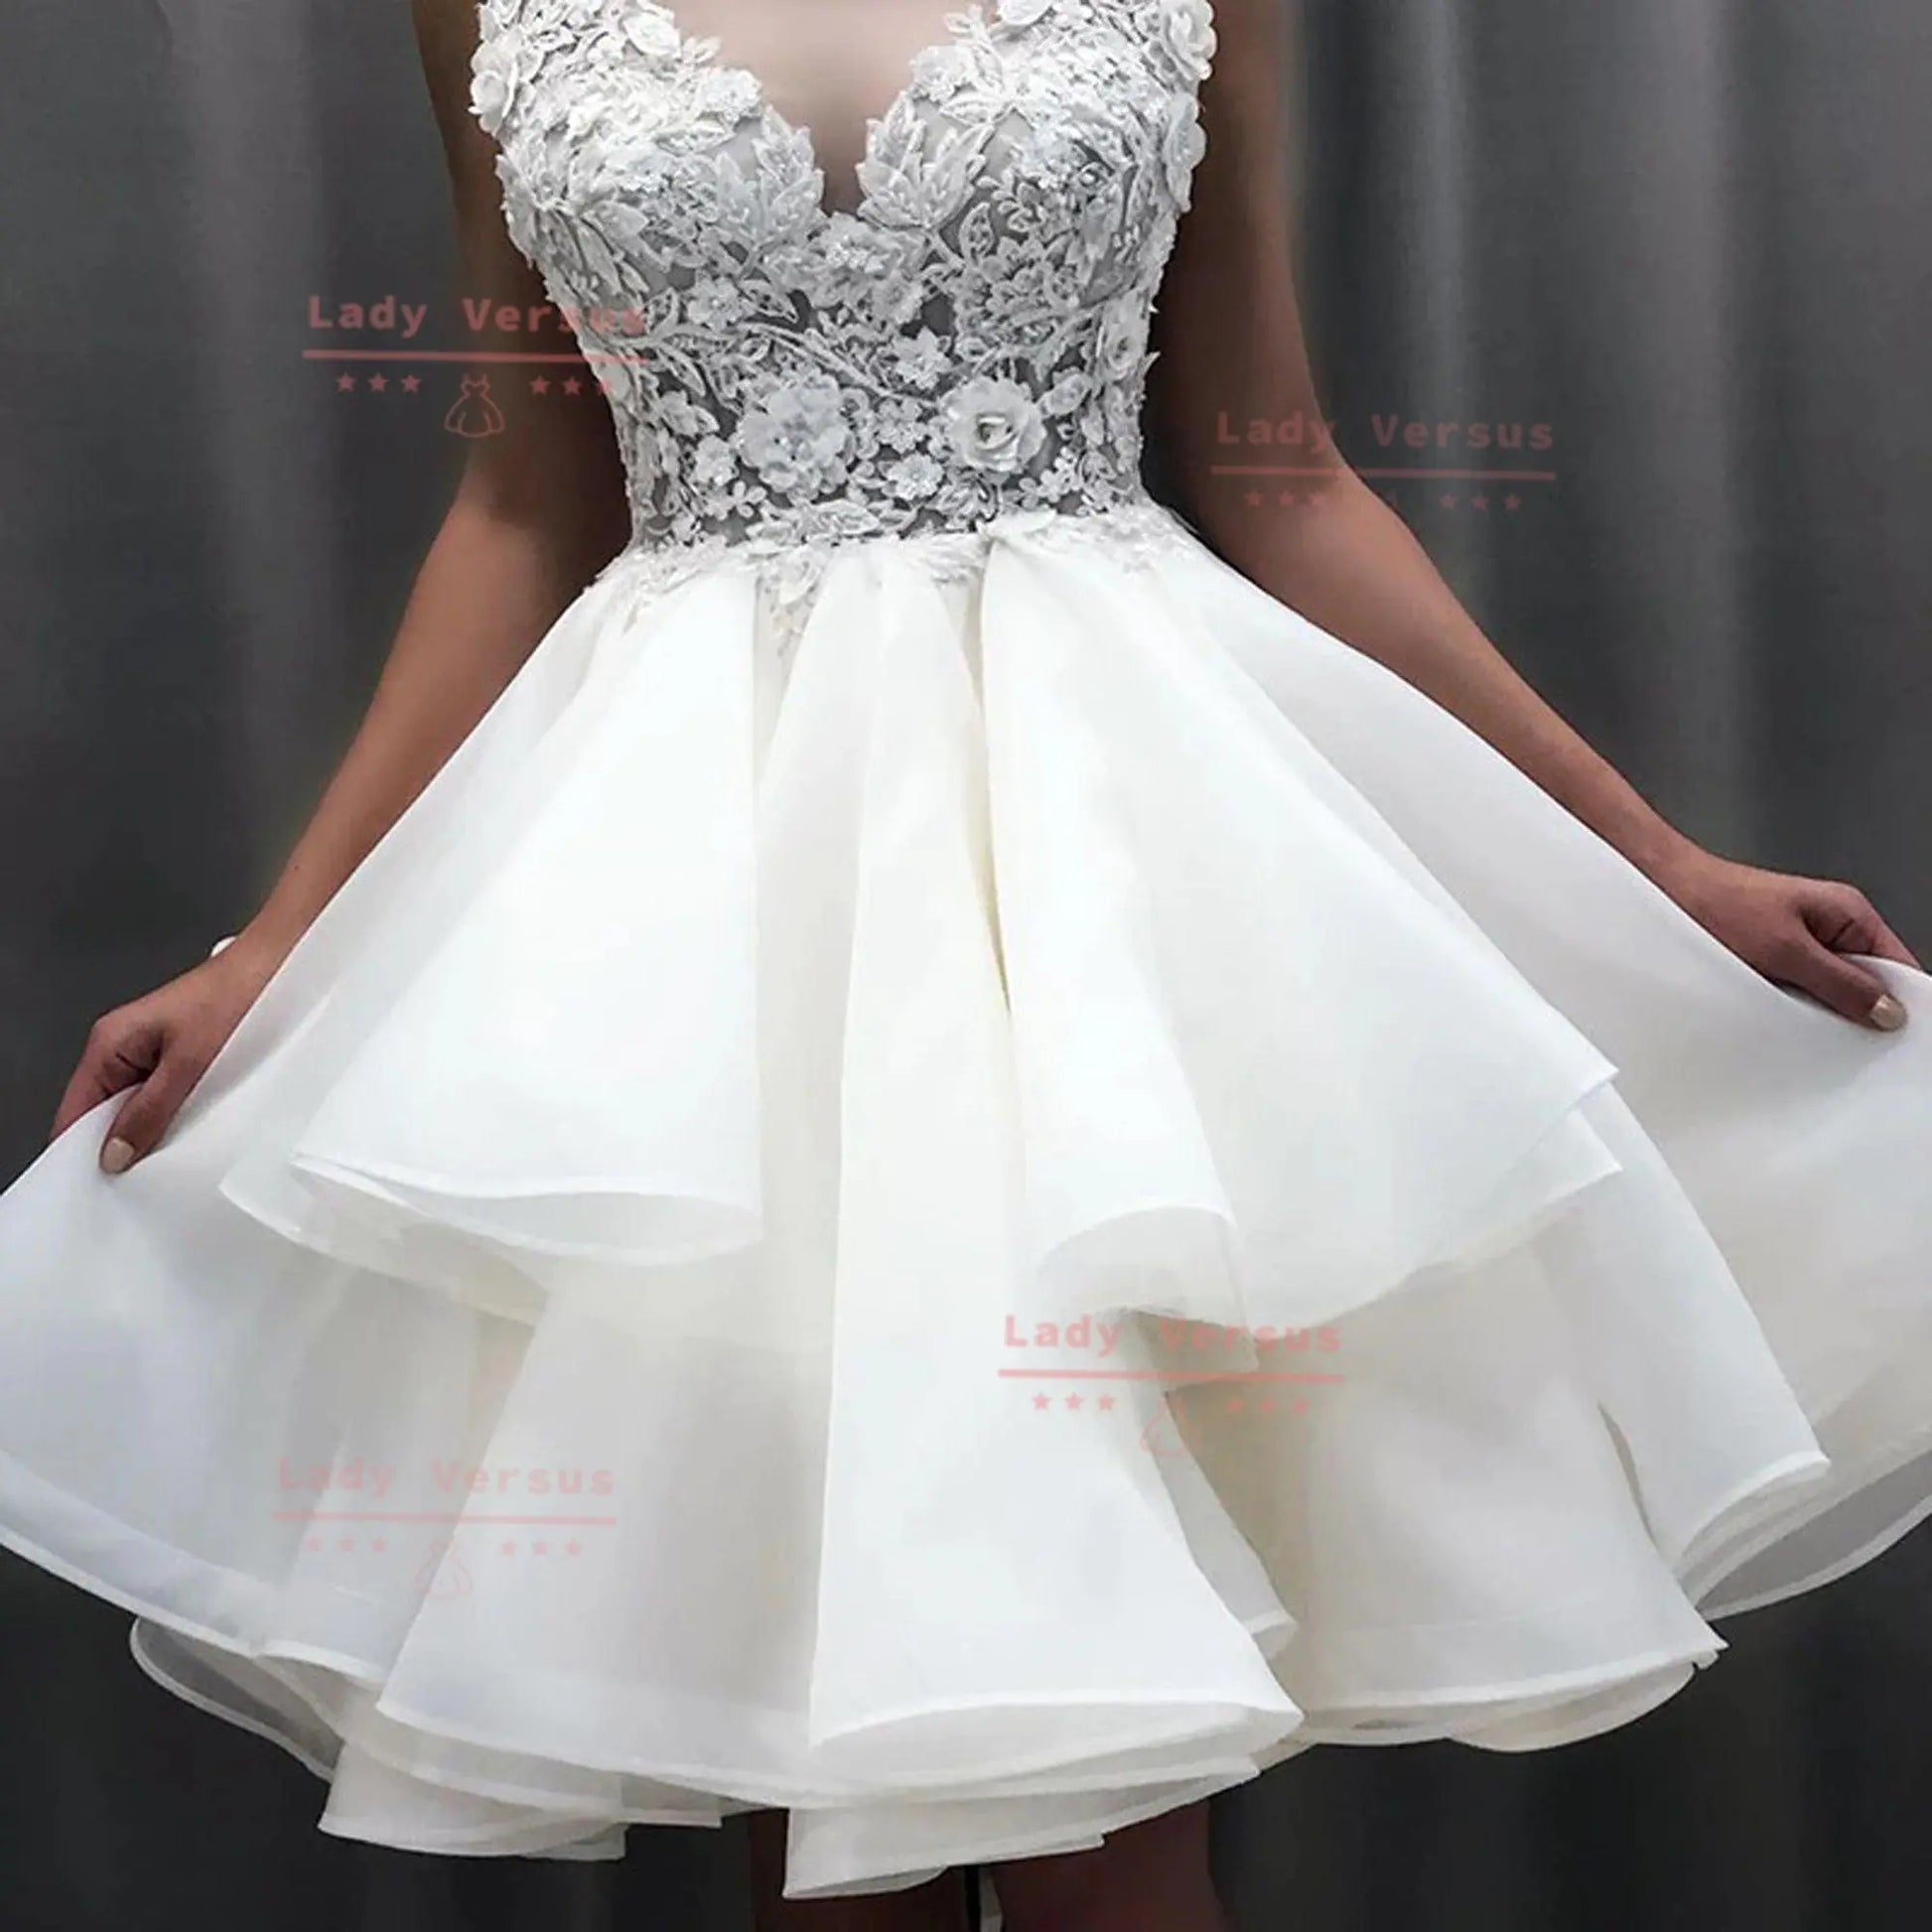 Short Chiffon  wedding dress/  Tulle Bridal Gown /Beach wedding dress /bridal gown/ bohemian lace dress/ Prom Dress Lady Versus